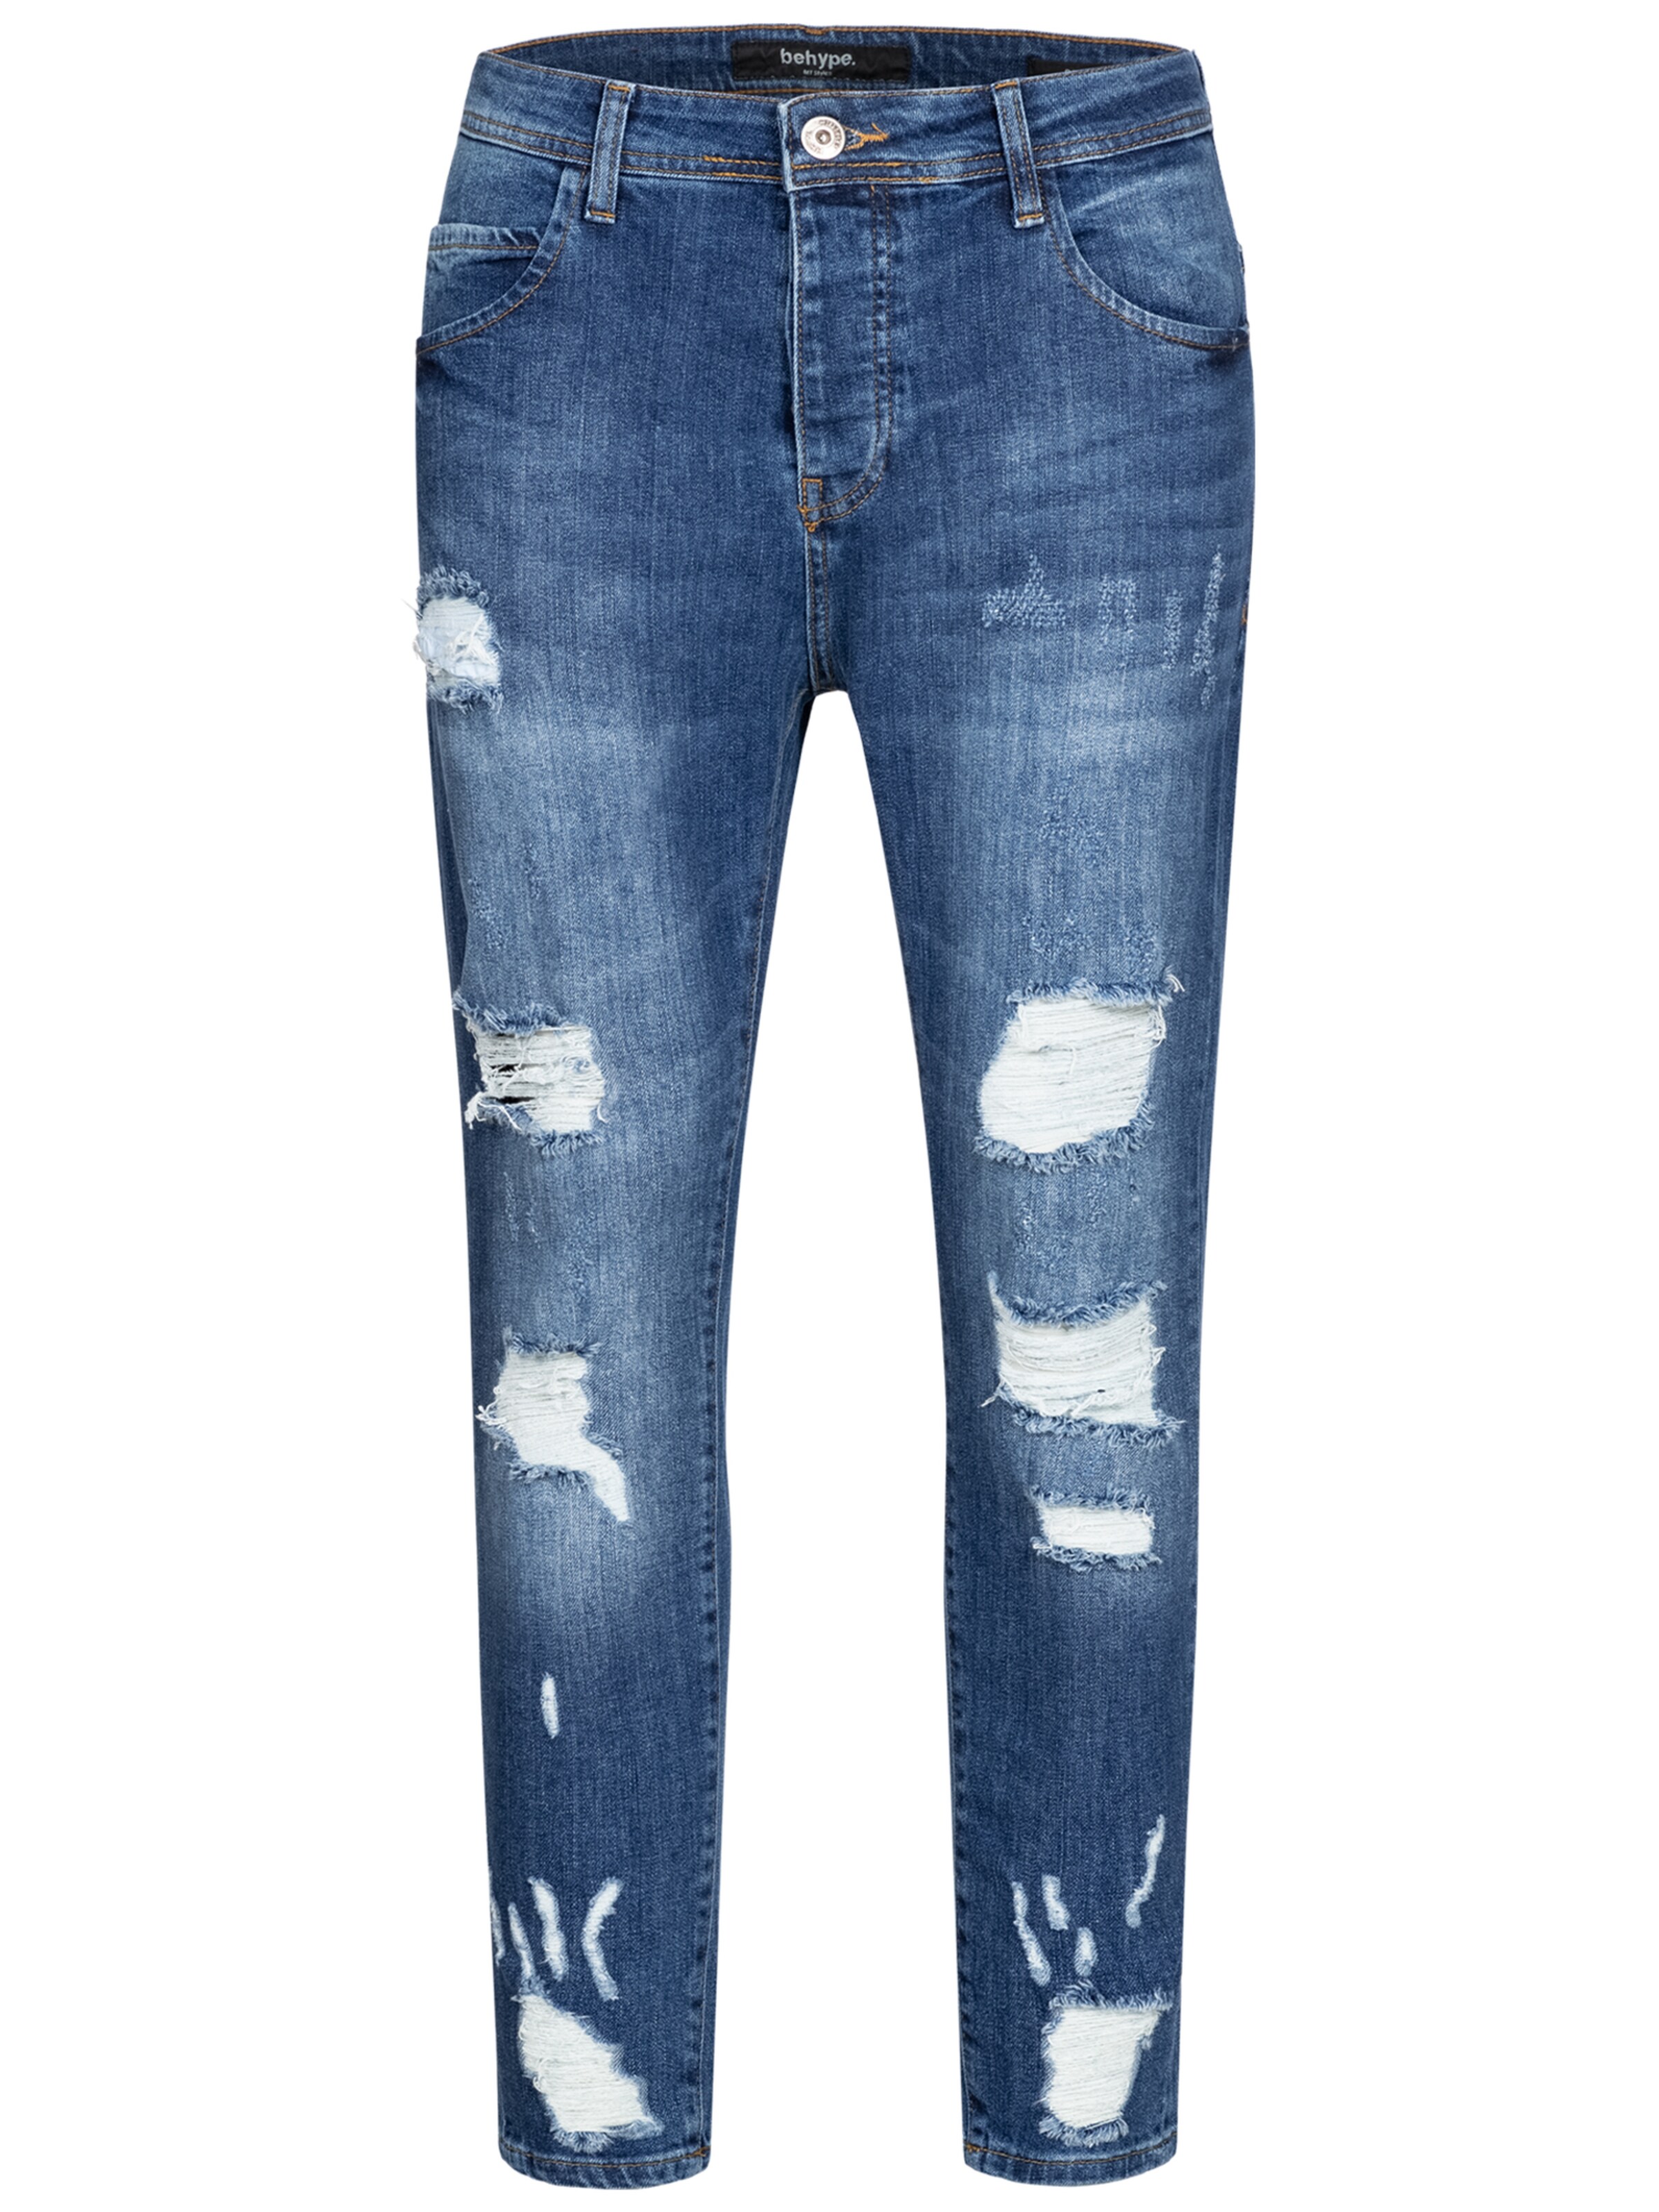 Männer Jeans behype Jeanshose 'Dino' in Blau - QU27200